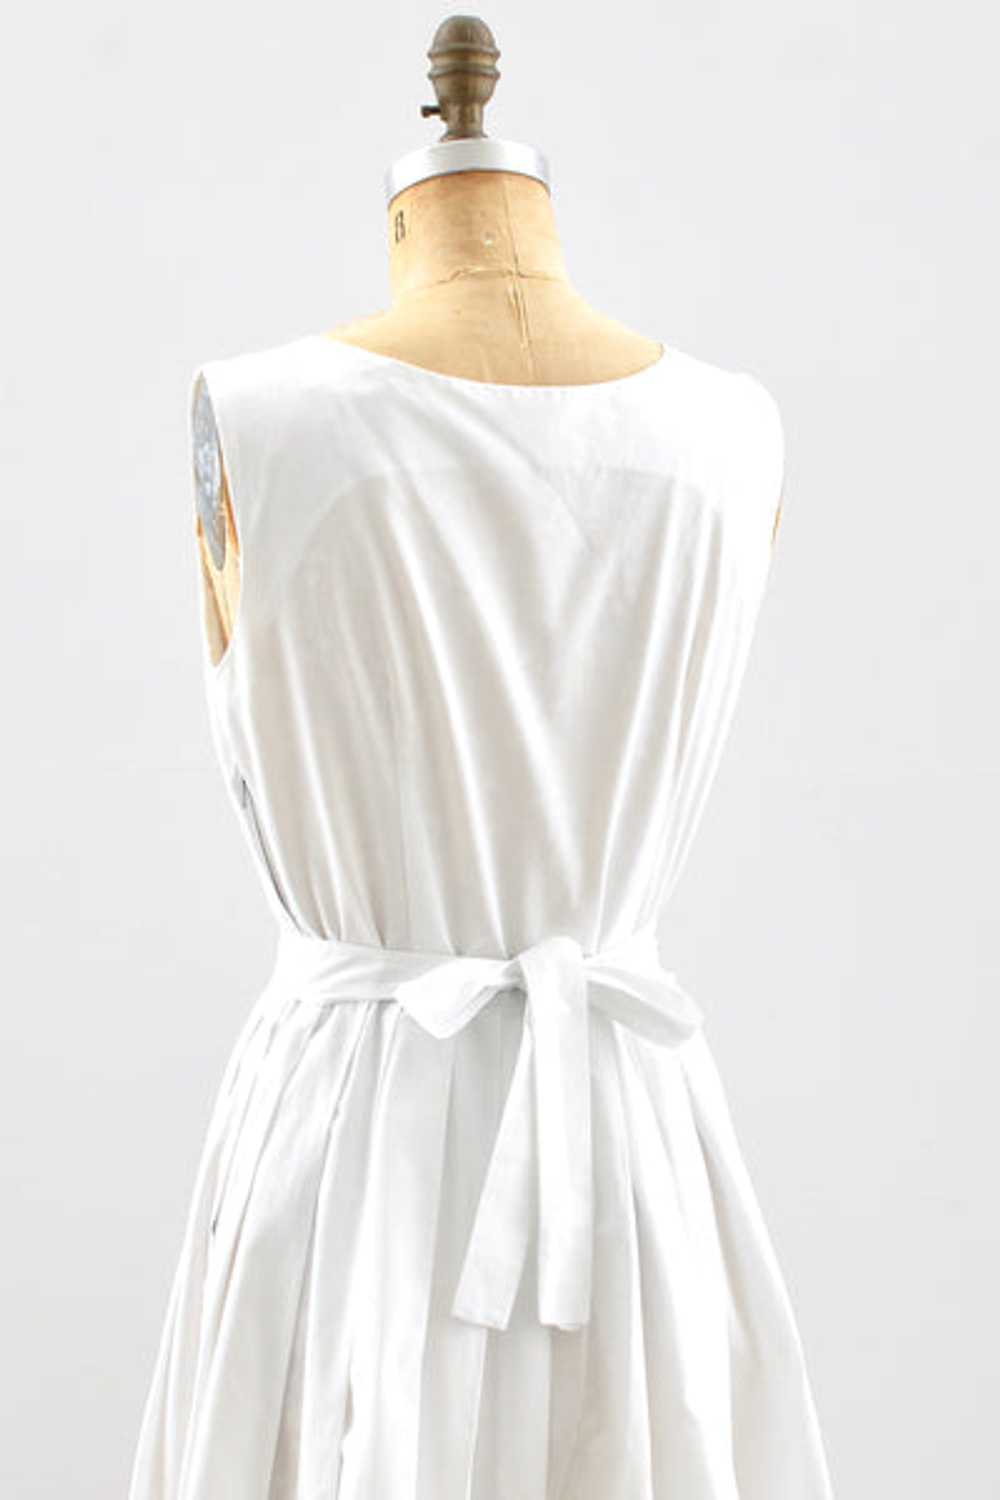 50's White Dress - image 4